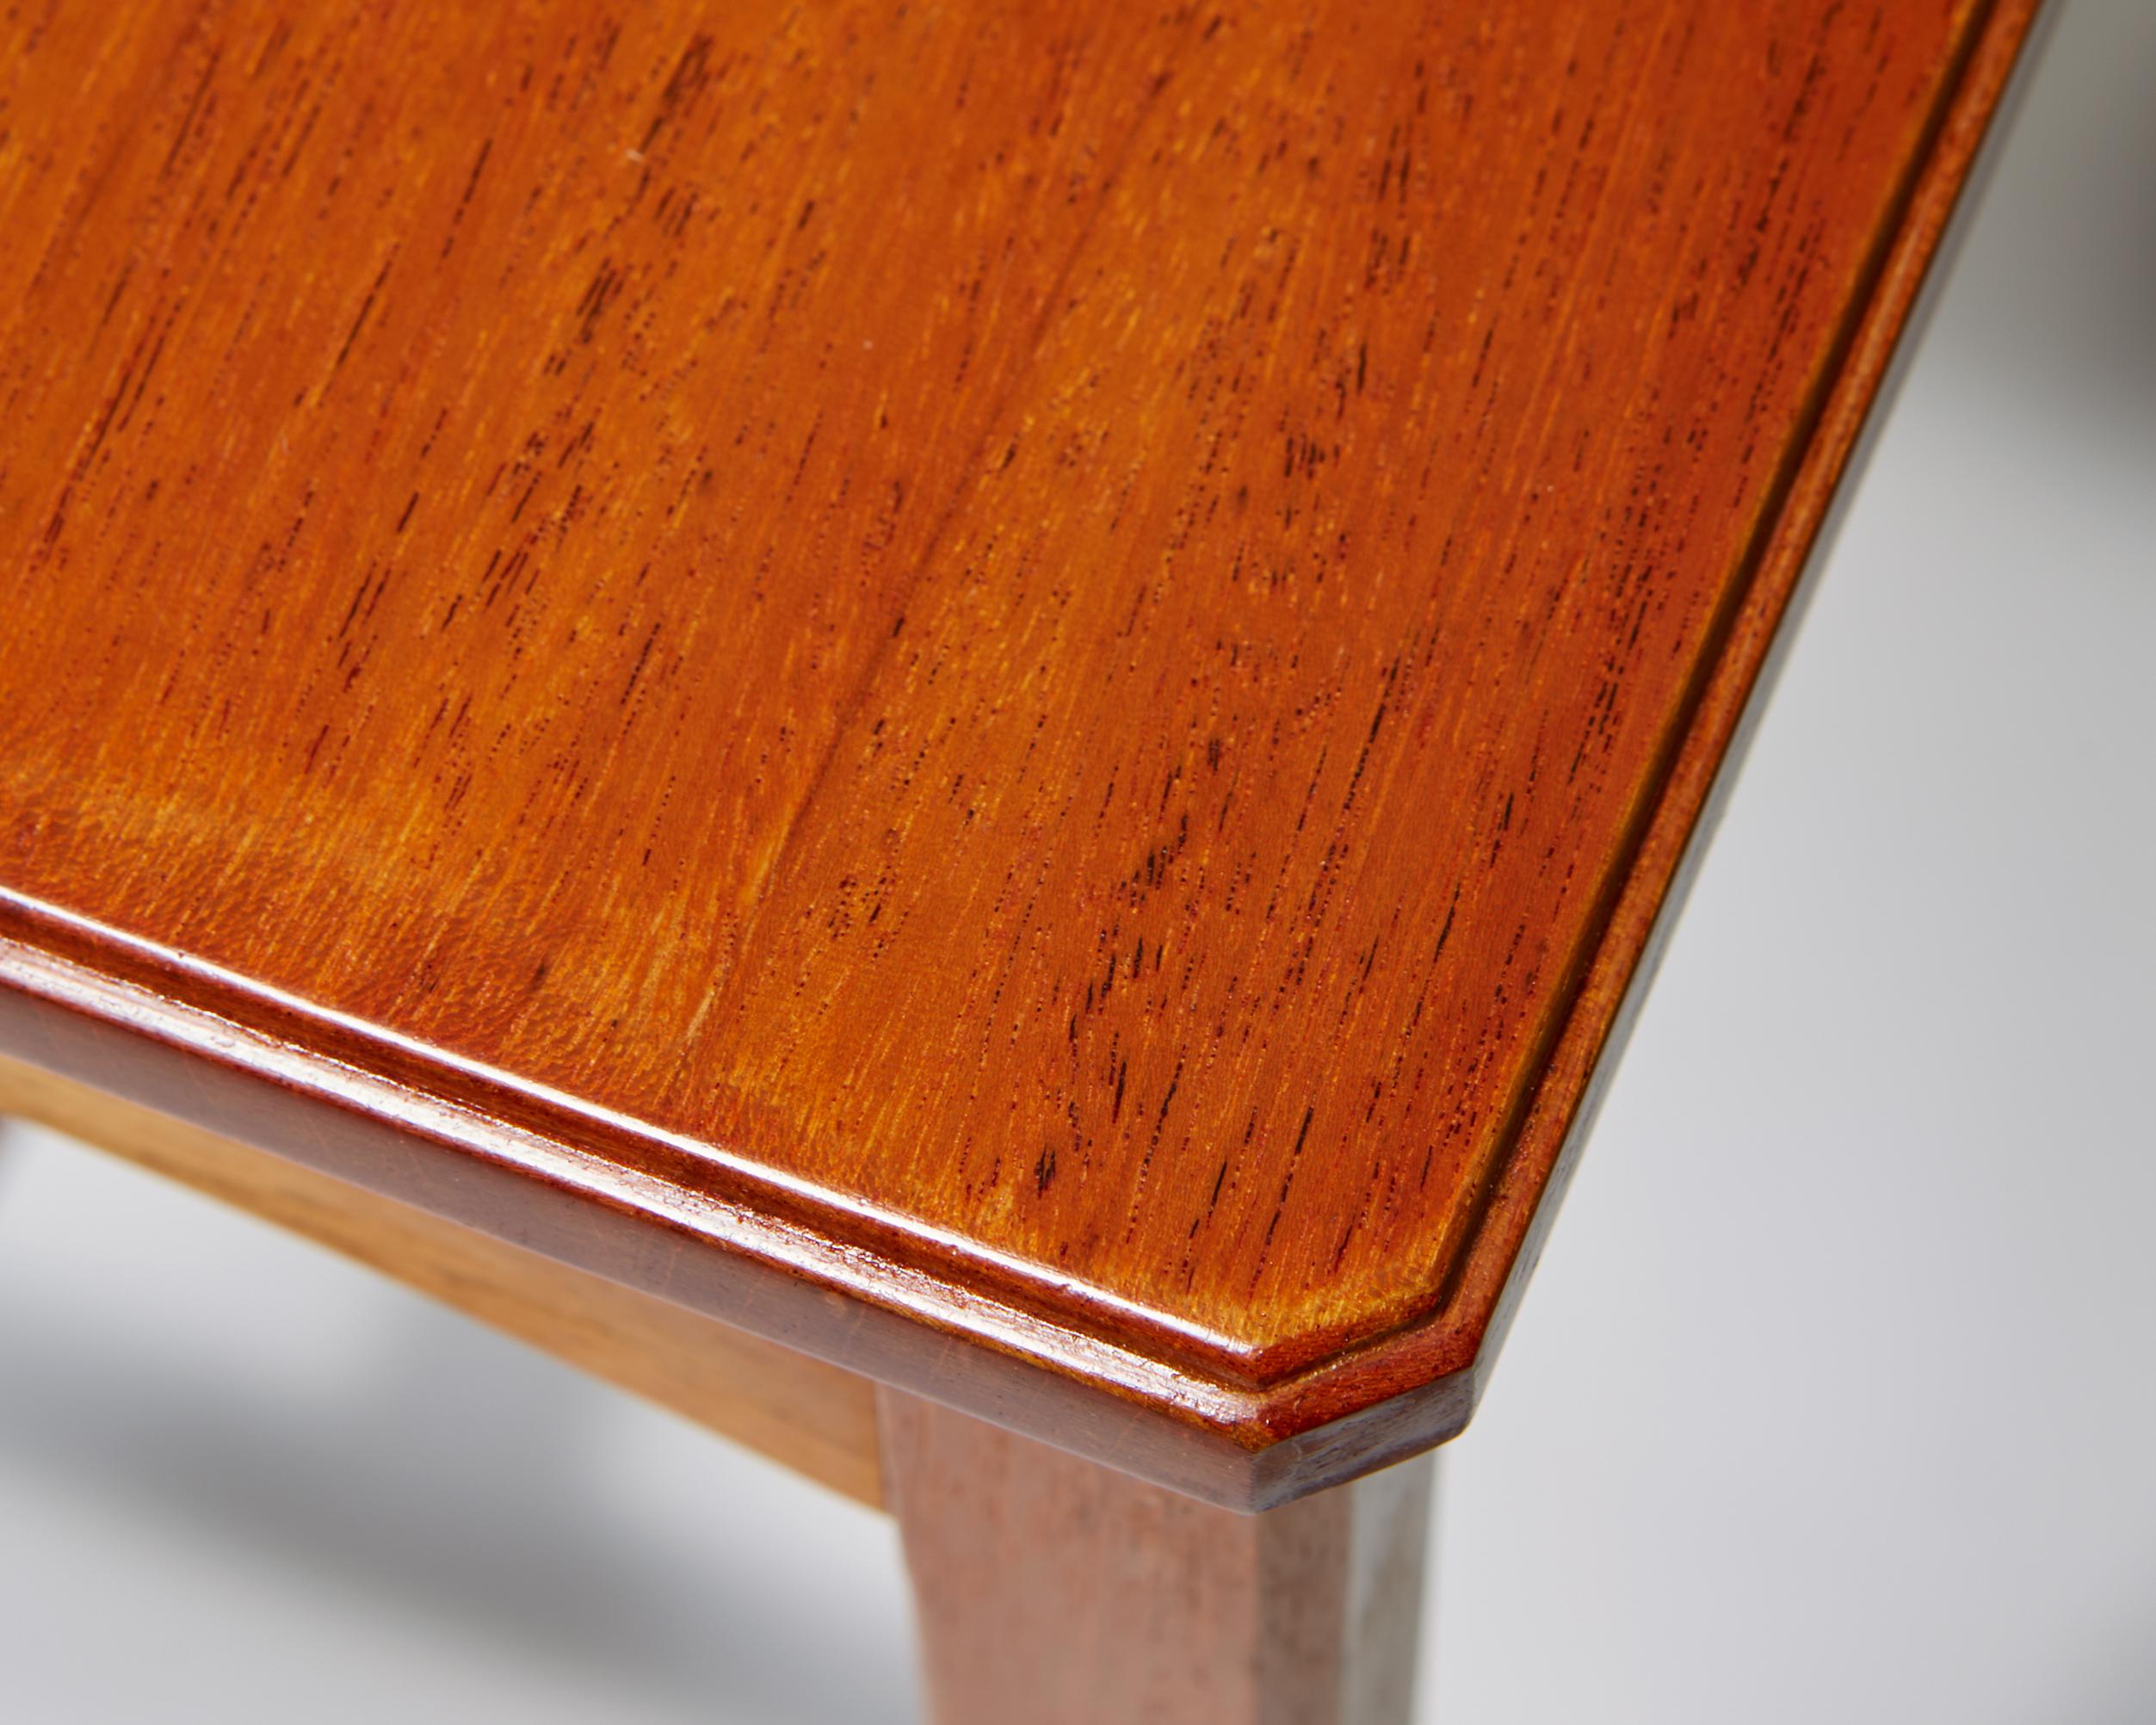 Mahogany Pair of Side Tables Designed by Carl Malmsten for Carl Löfving & Söner, Sweden